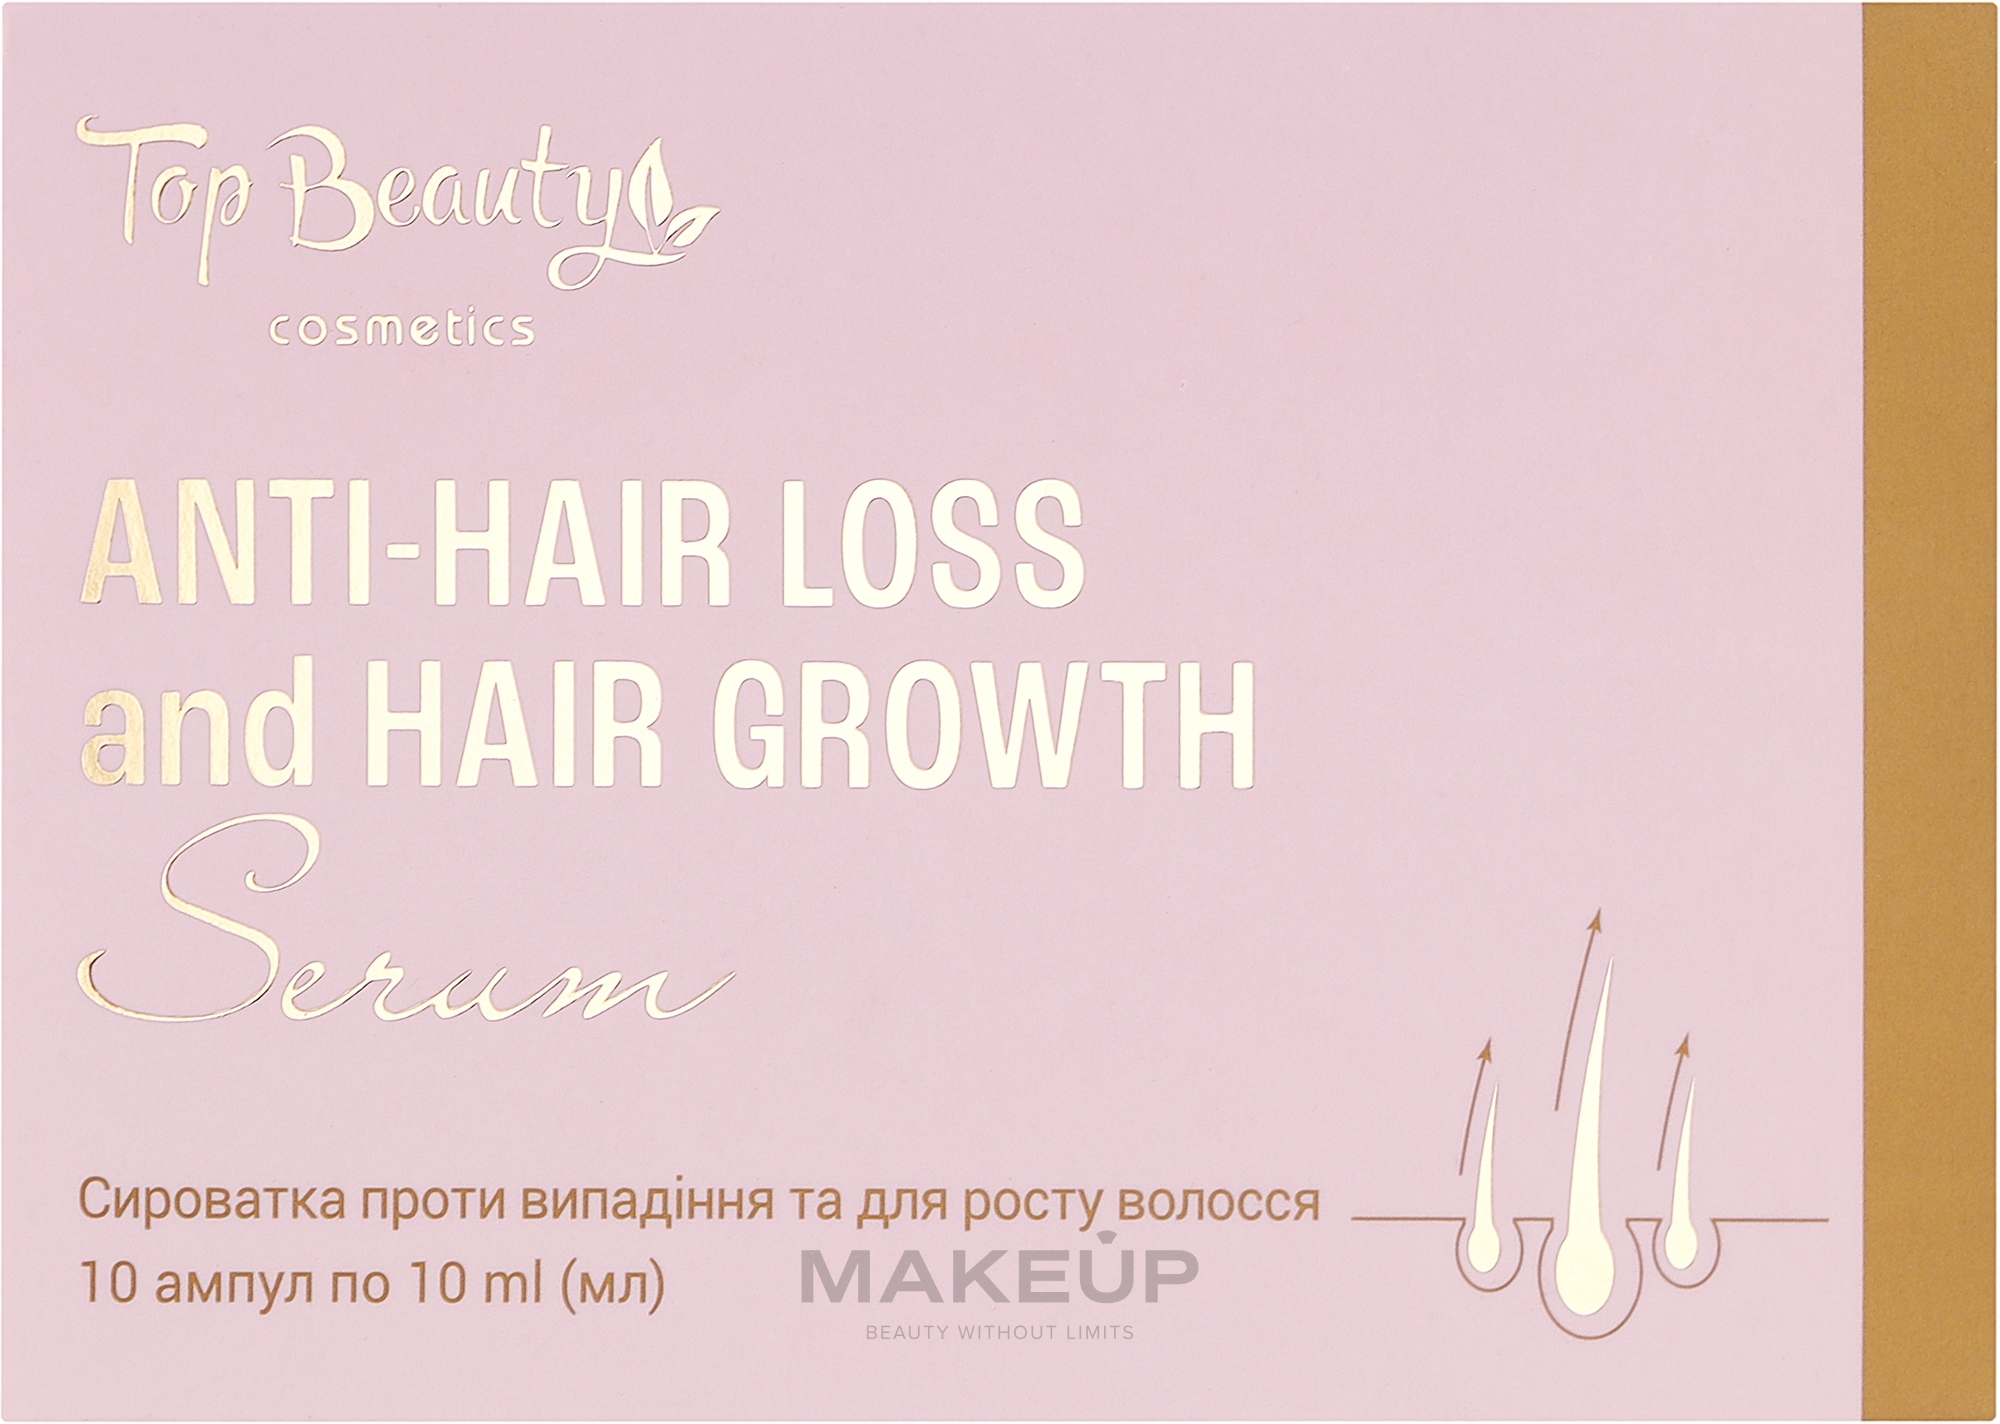 Сыворотка против выпадения и для роста волос - Top Beauty Anti-Hair Loss and Hair Growth Serum — фото 10x10ml